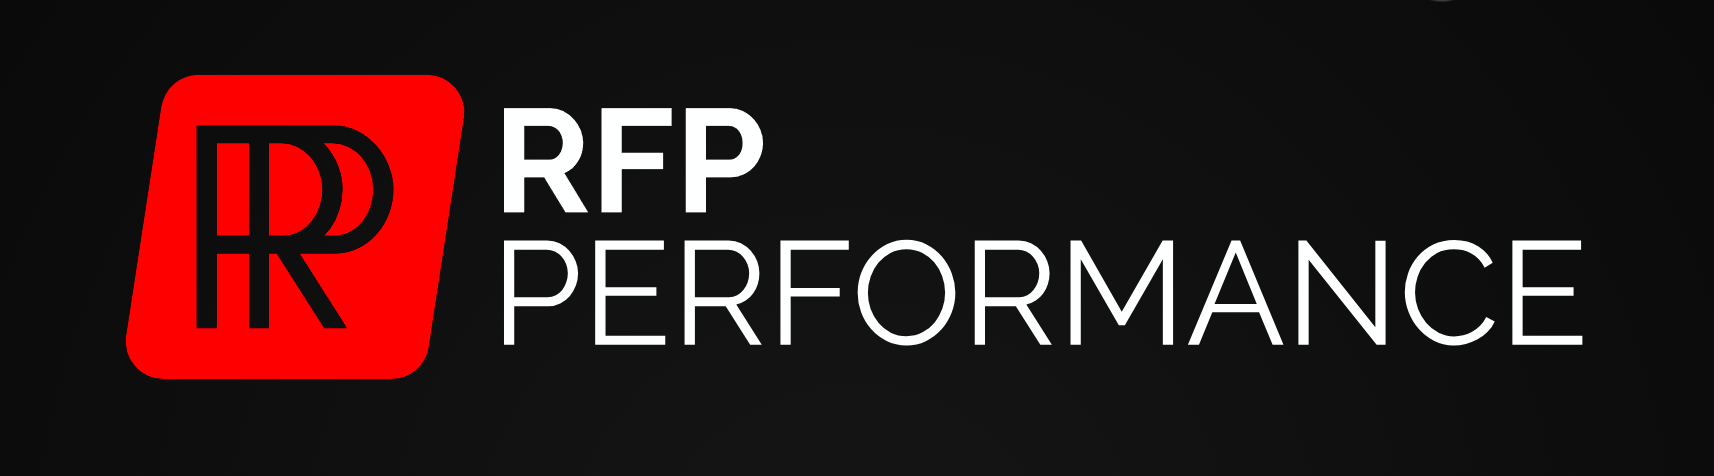 RFP PERFORMANCE